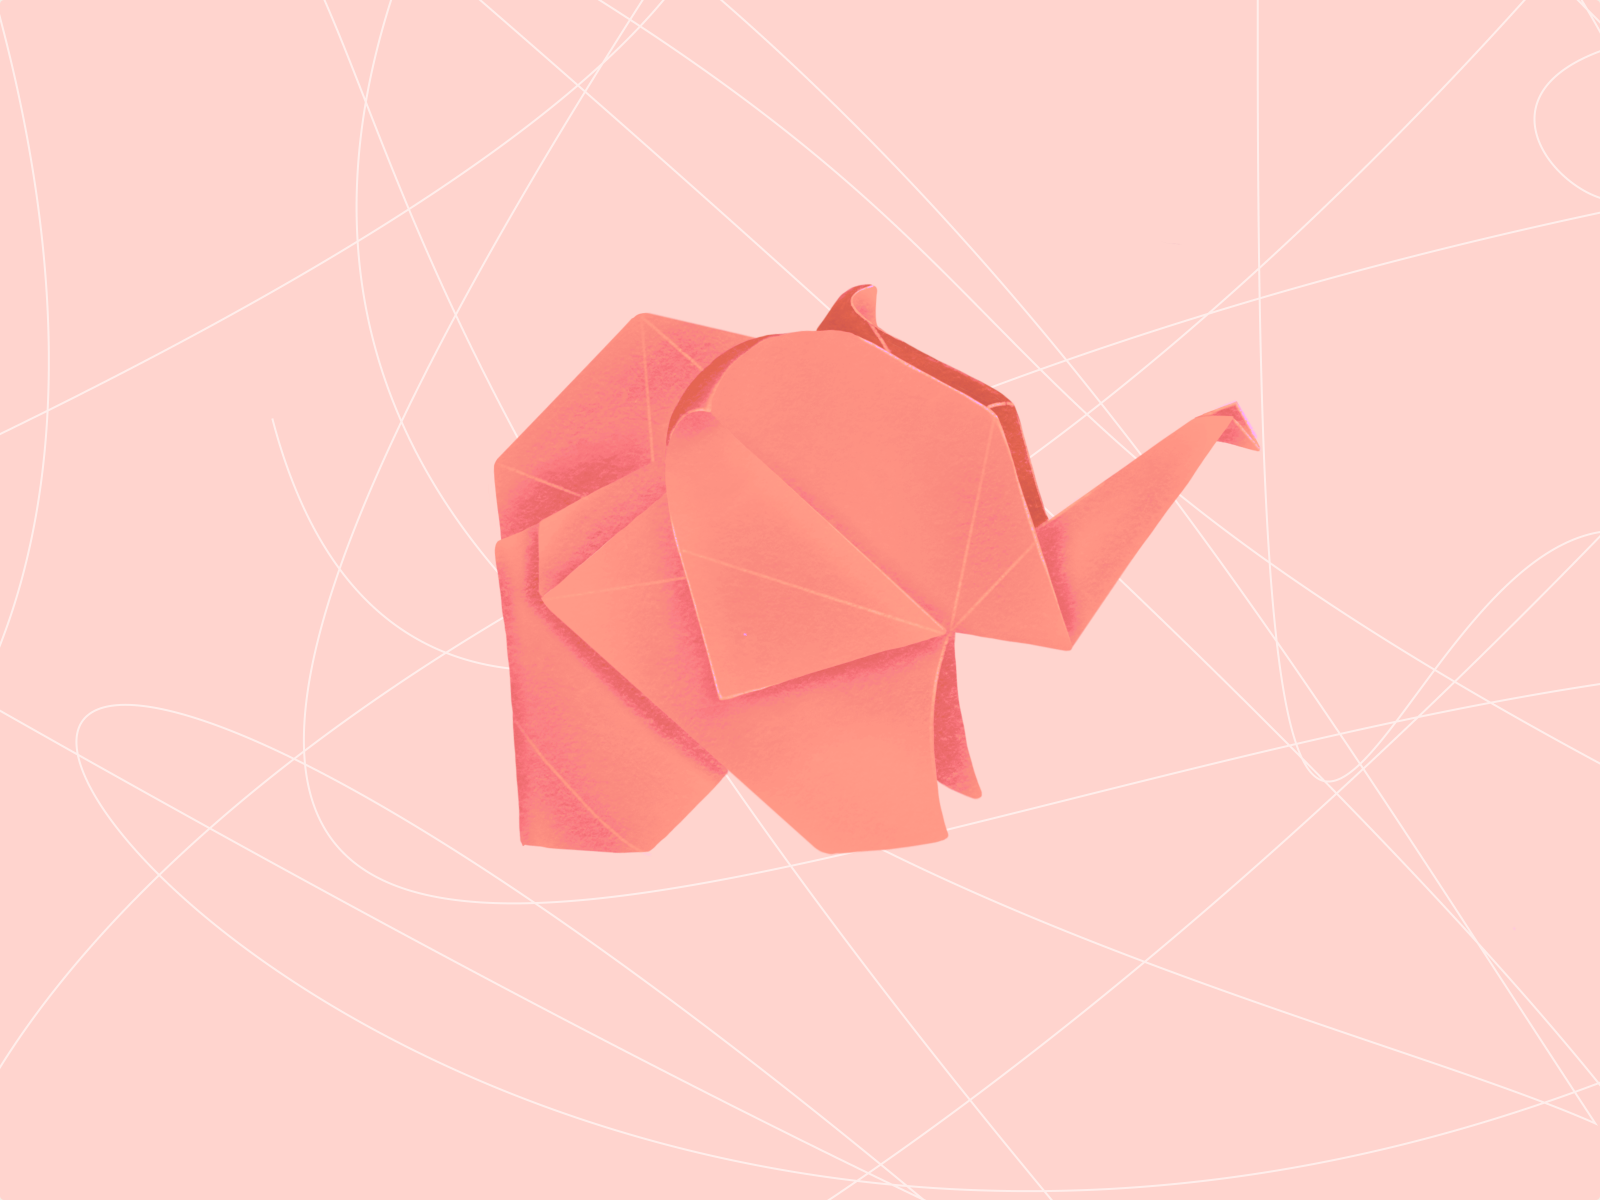 🦖 Origami lessons